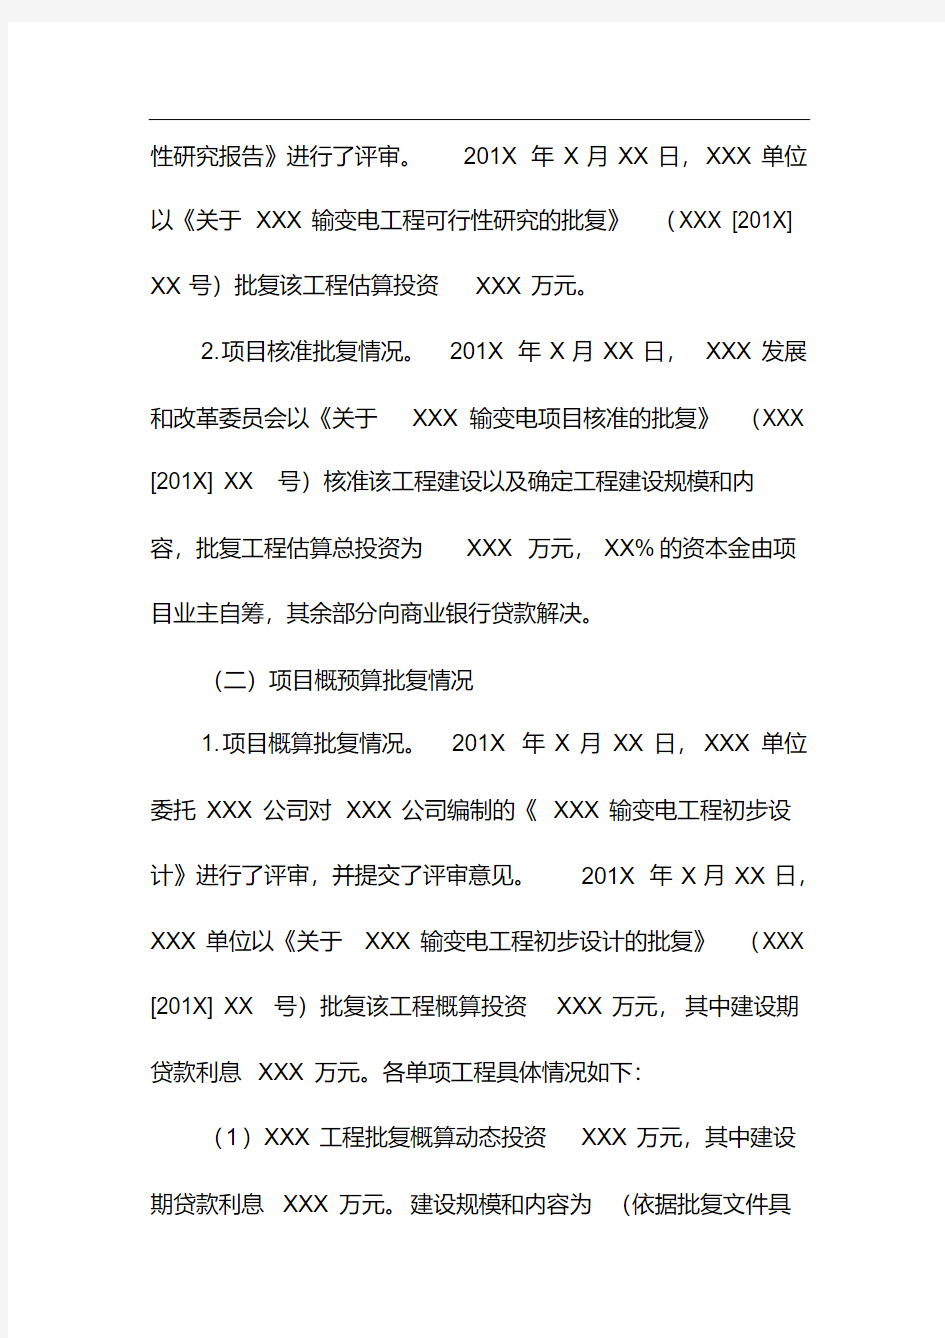 XXX工程竣工财务决算审计报告模板-精品.pdf